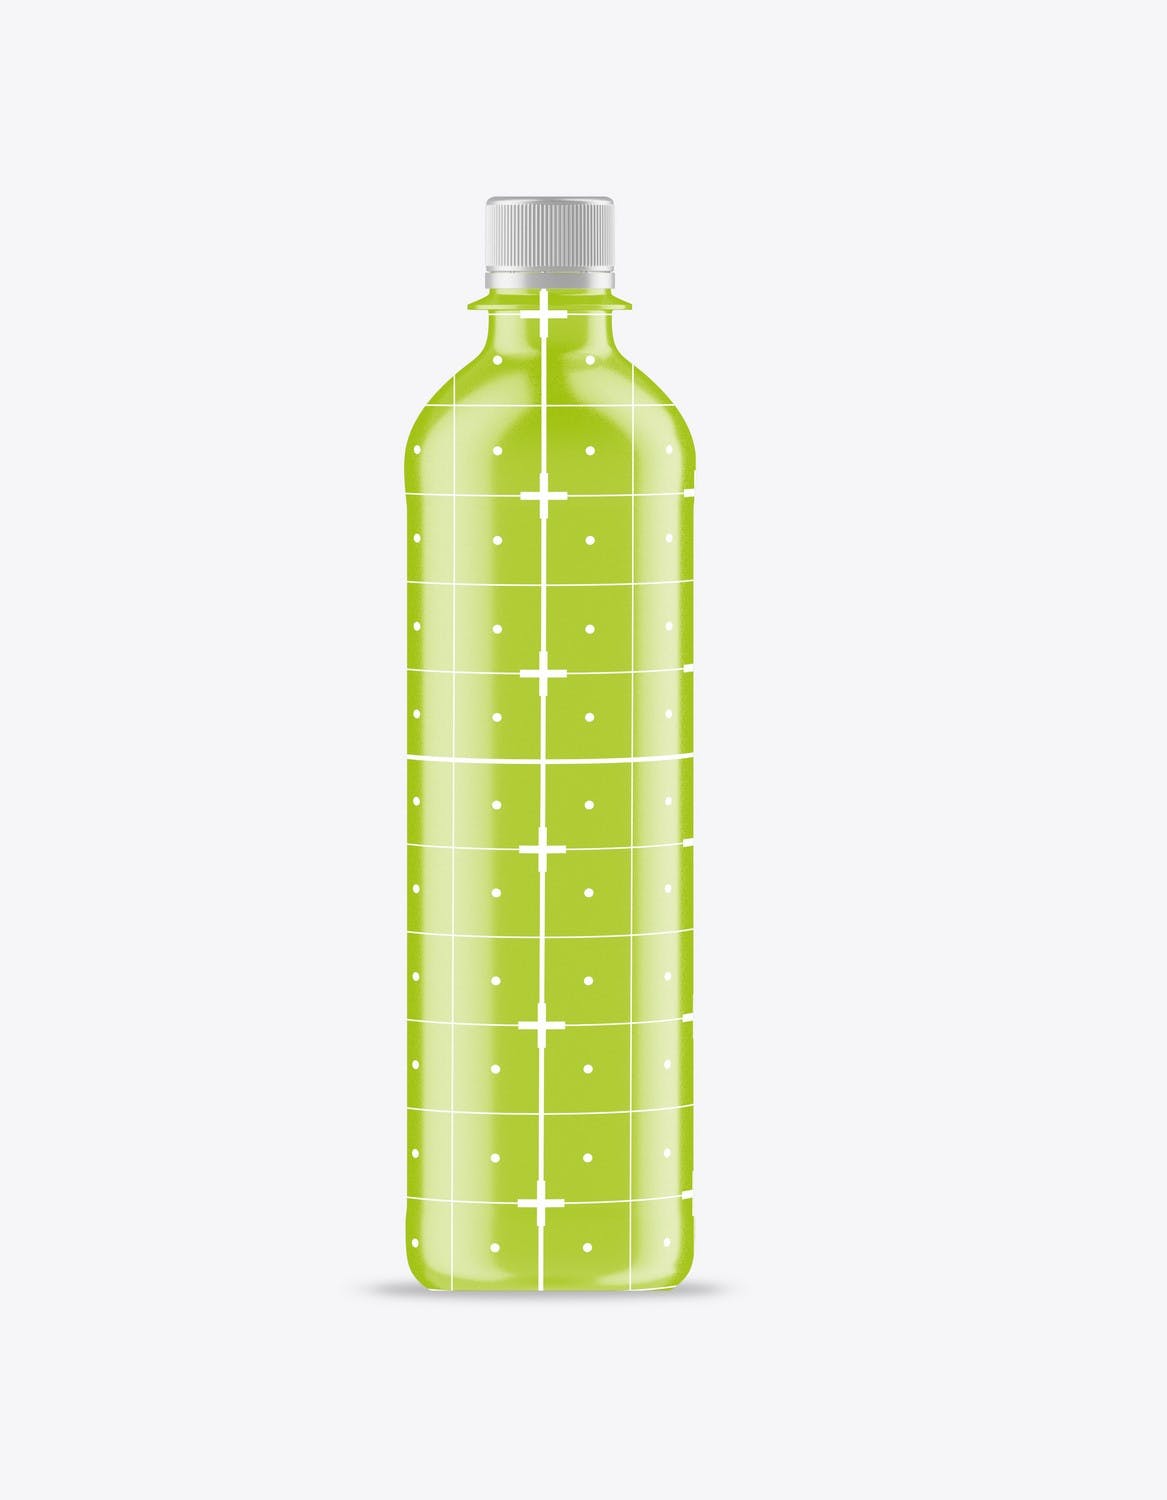 不同瓶盖的塑料果汁瓶设计样机模板 Plastic Juice Bottle with Different Caps Mockup 样机素材 第6张